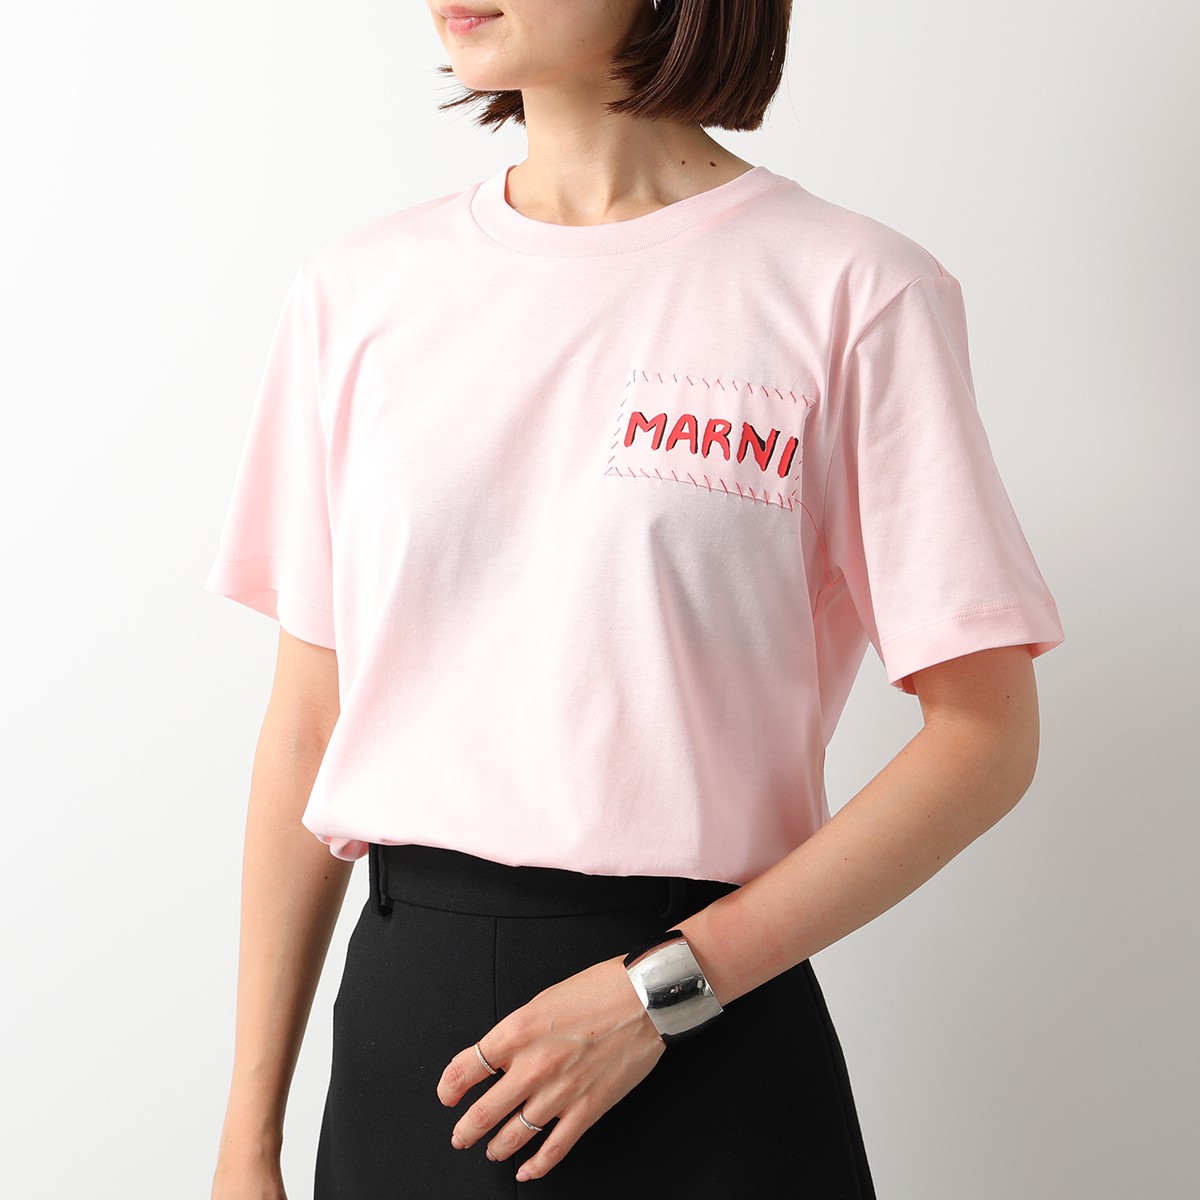 MARNI マルニ 半袖Tシャツ HUMU0198X0 UTC017 レディース コットン ロゴパッチ ステッチ ロゴT クルーネック カットソー  カラー3色